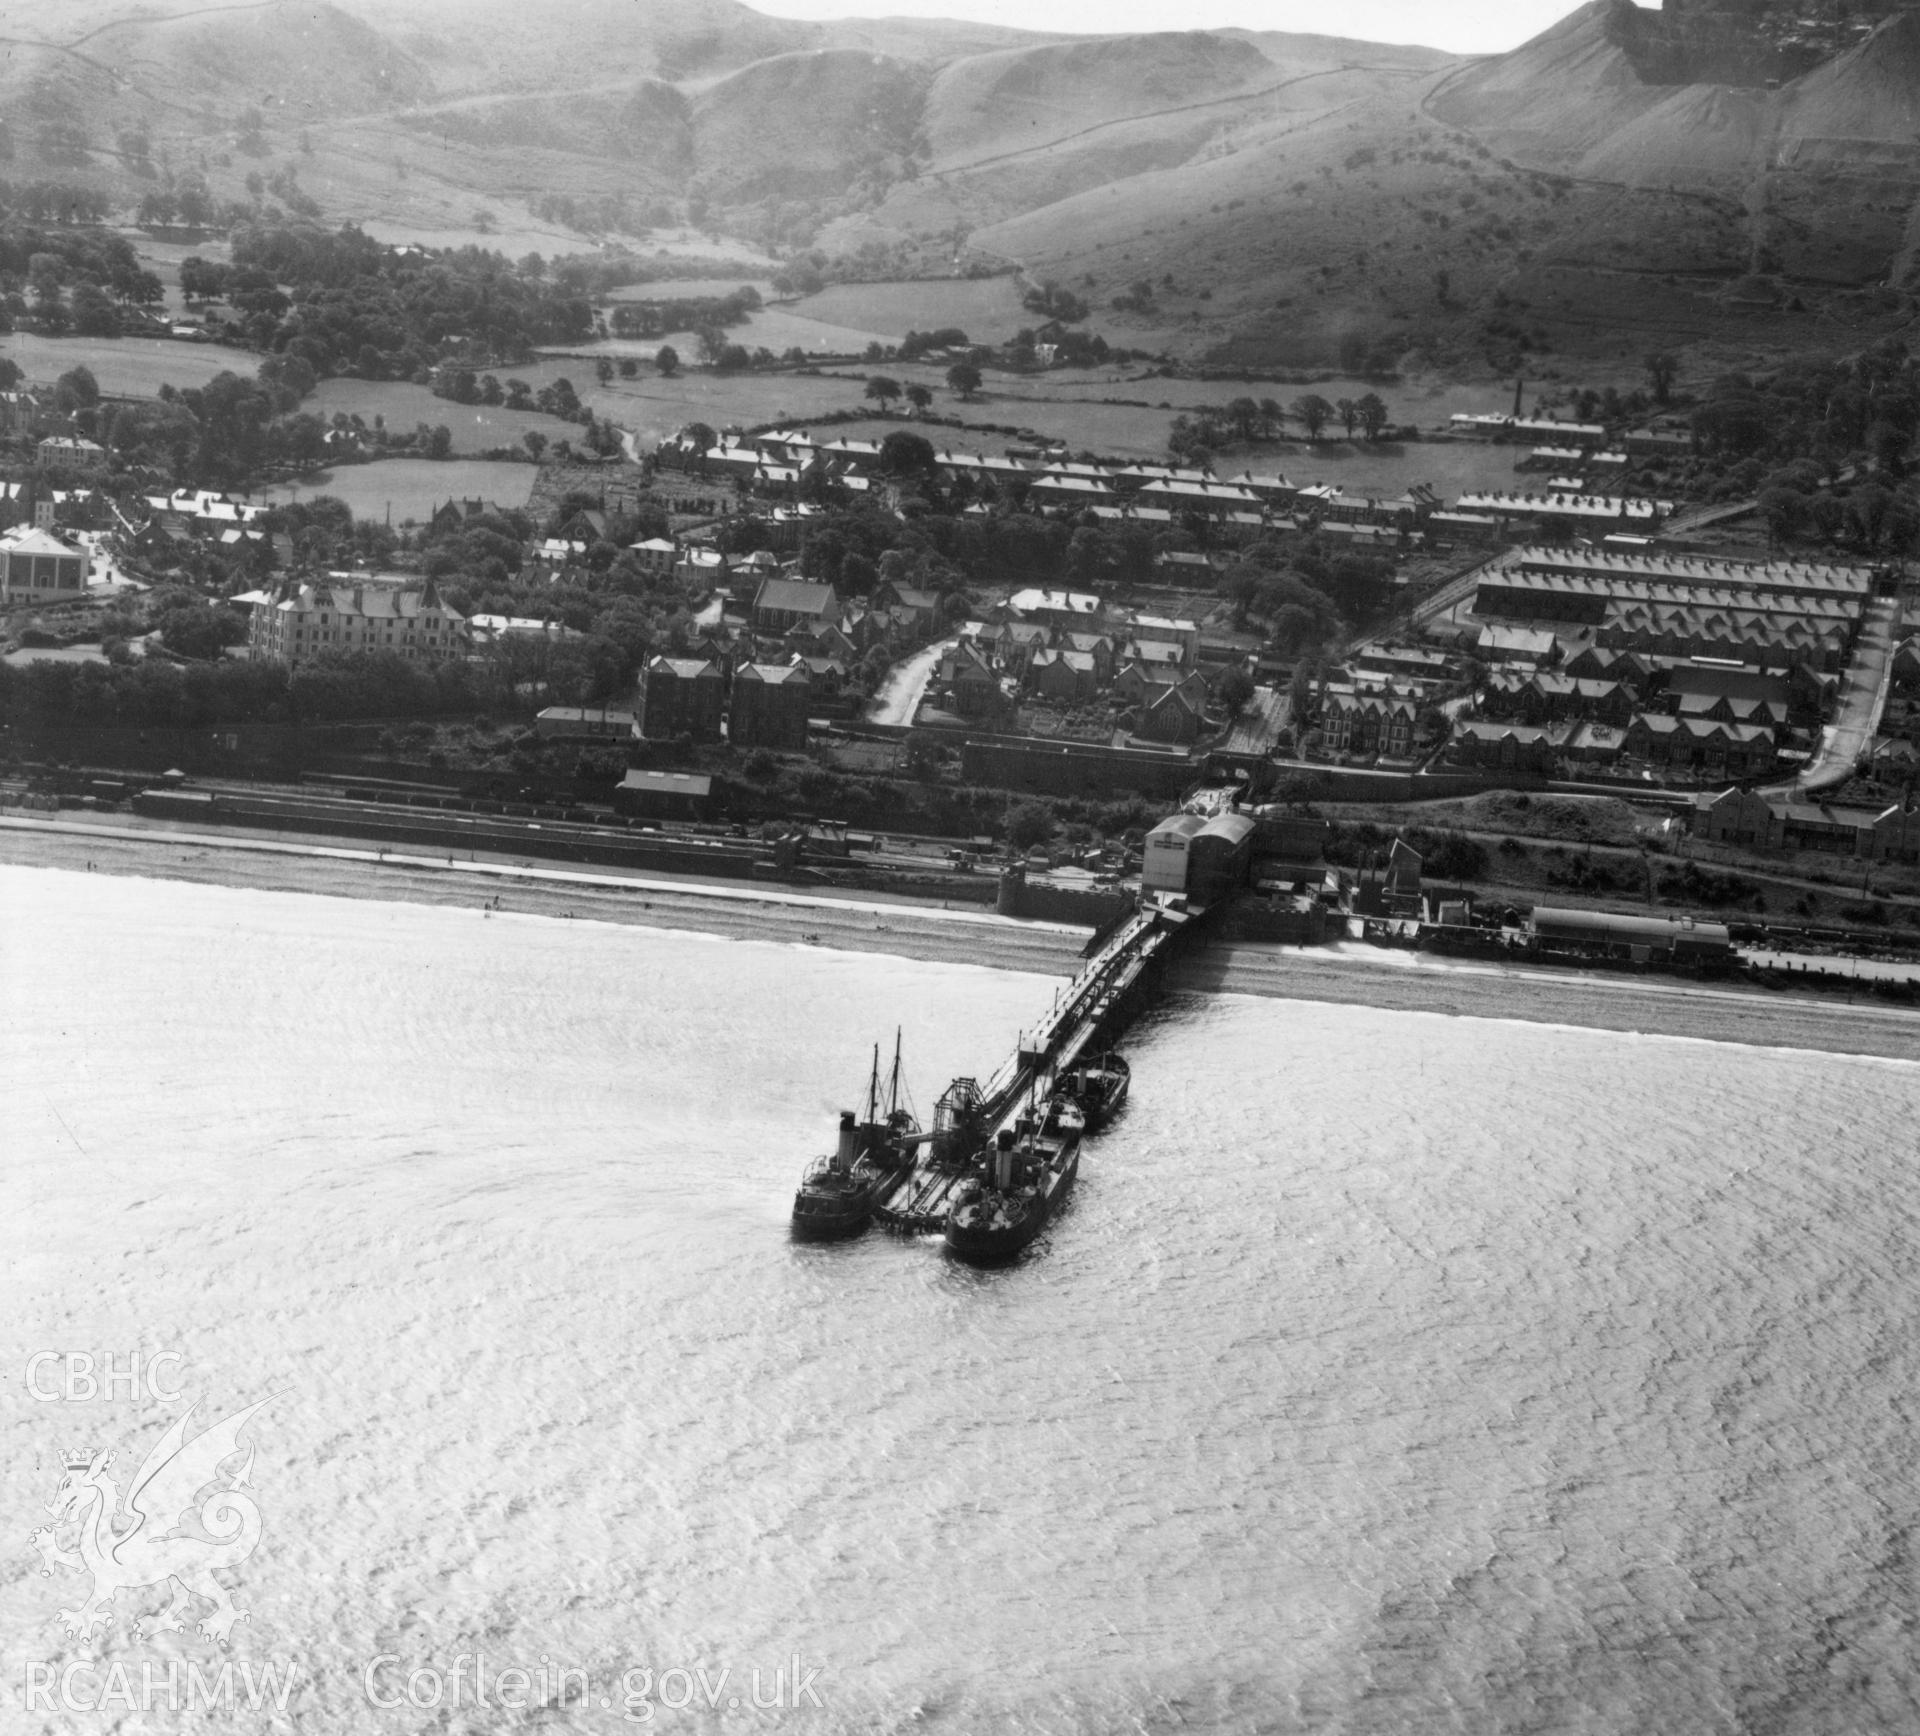 View of Graiglwyd jetty at Penmaenmawr. Oblique aerial photograph, 5?" cut roll film.